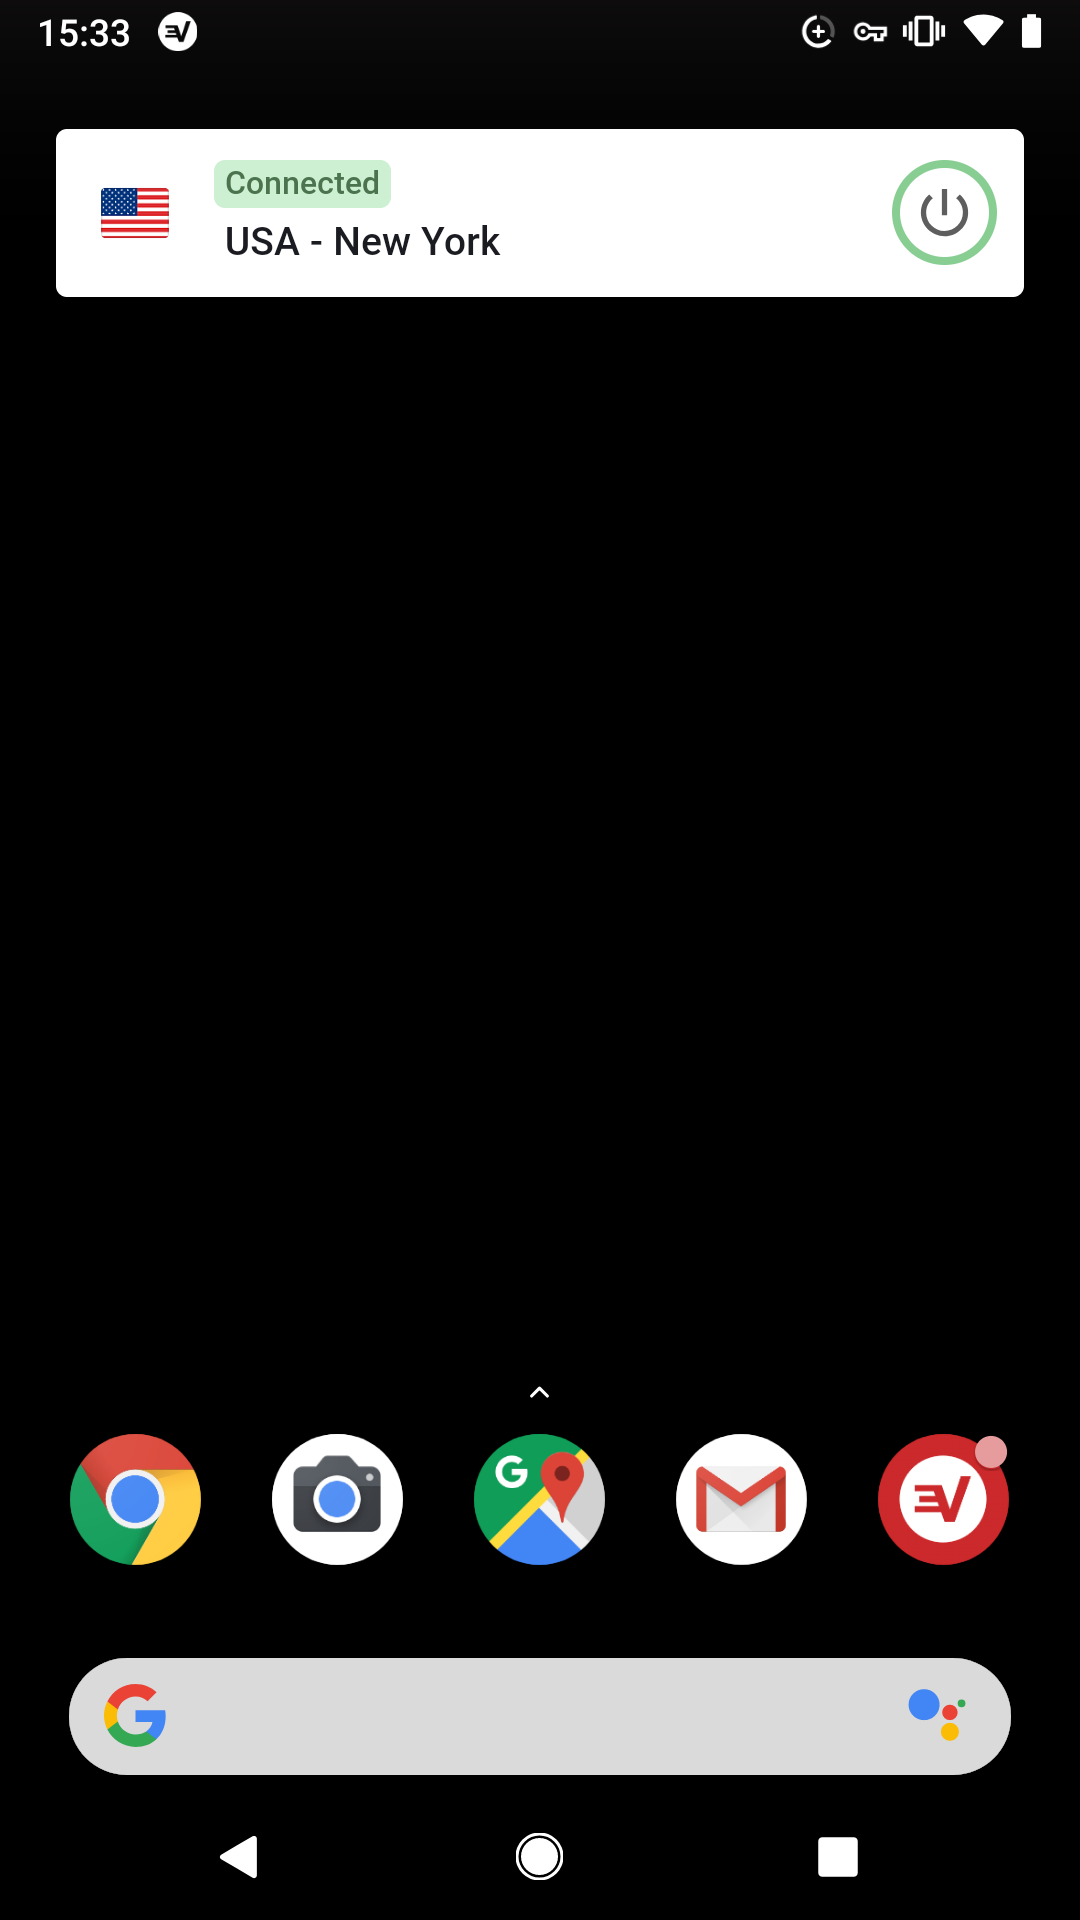 Tangkapan skrin dari Android yang memaparkan widget VPN.